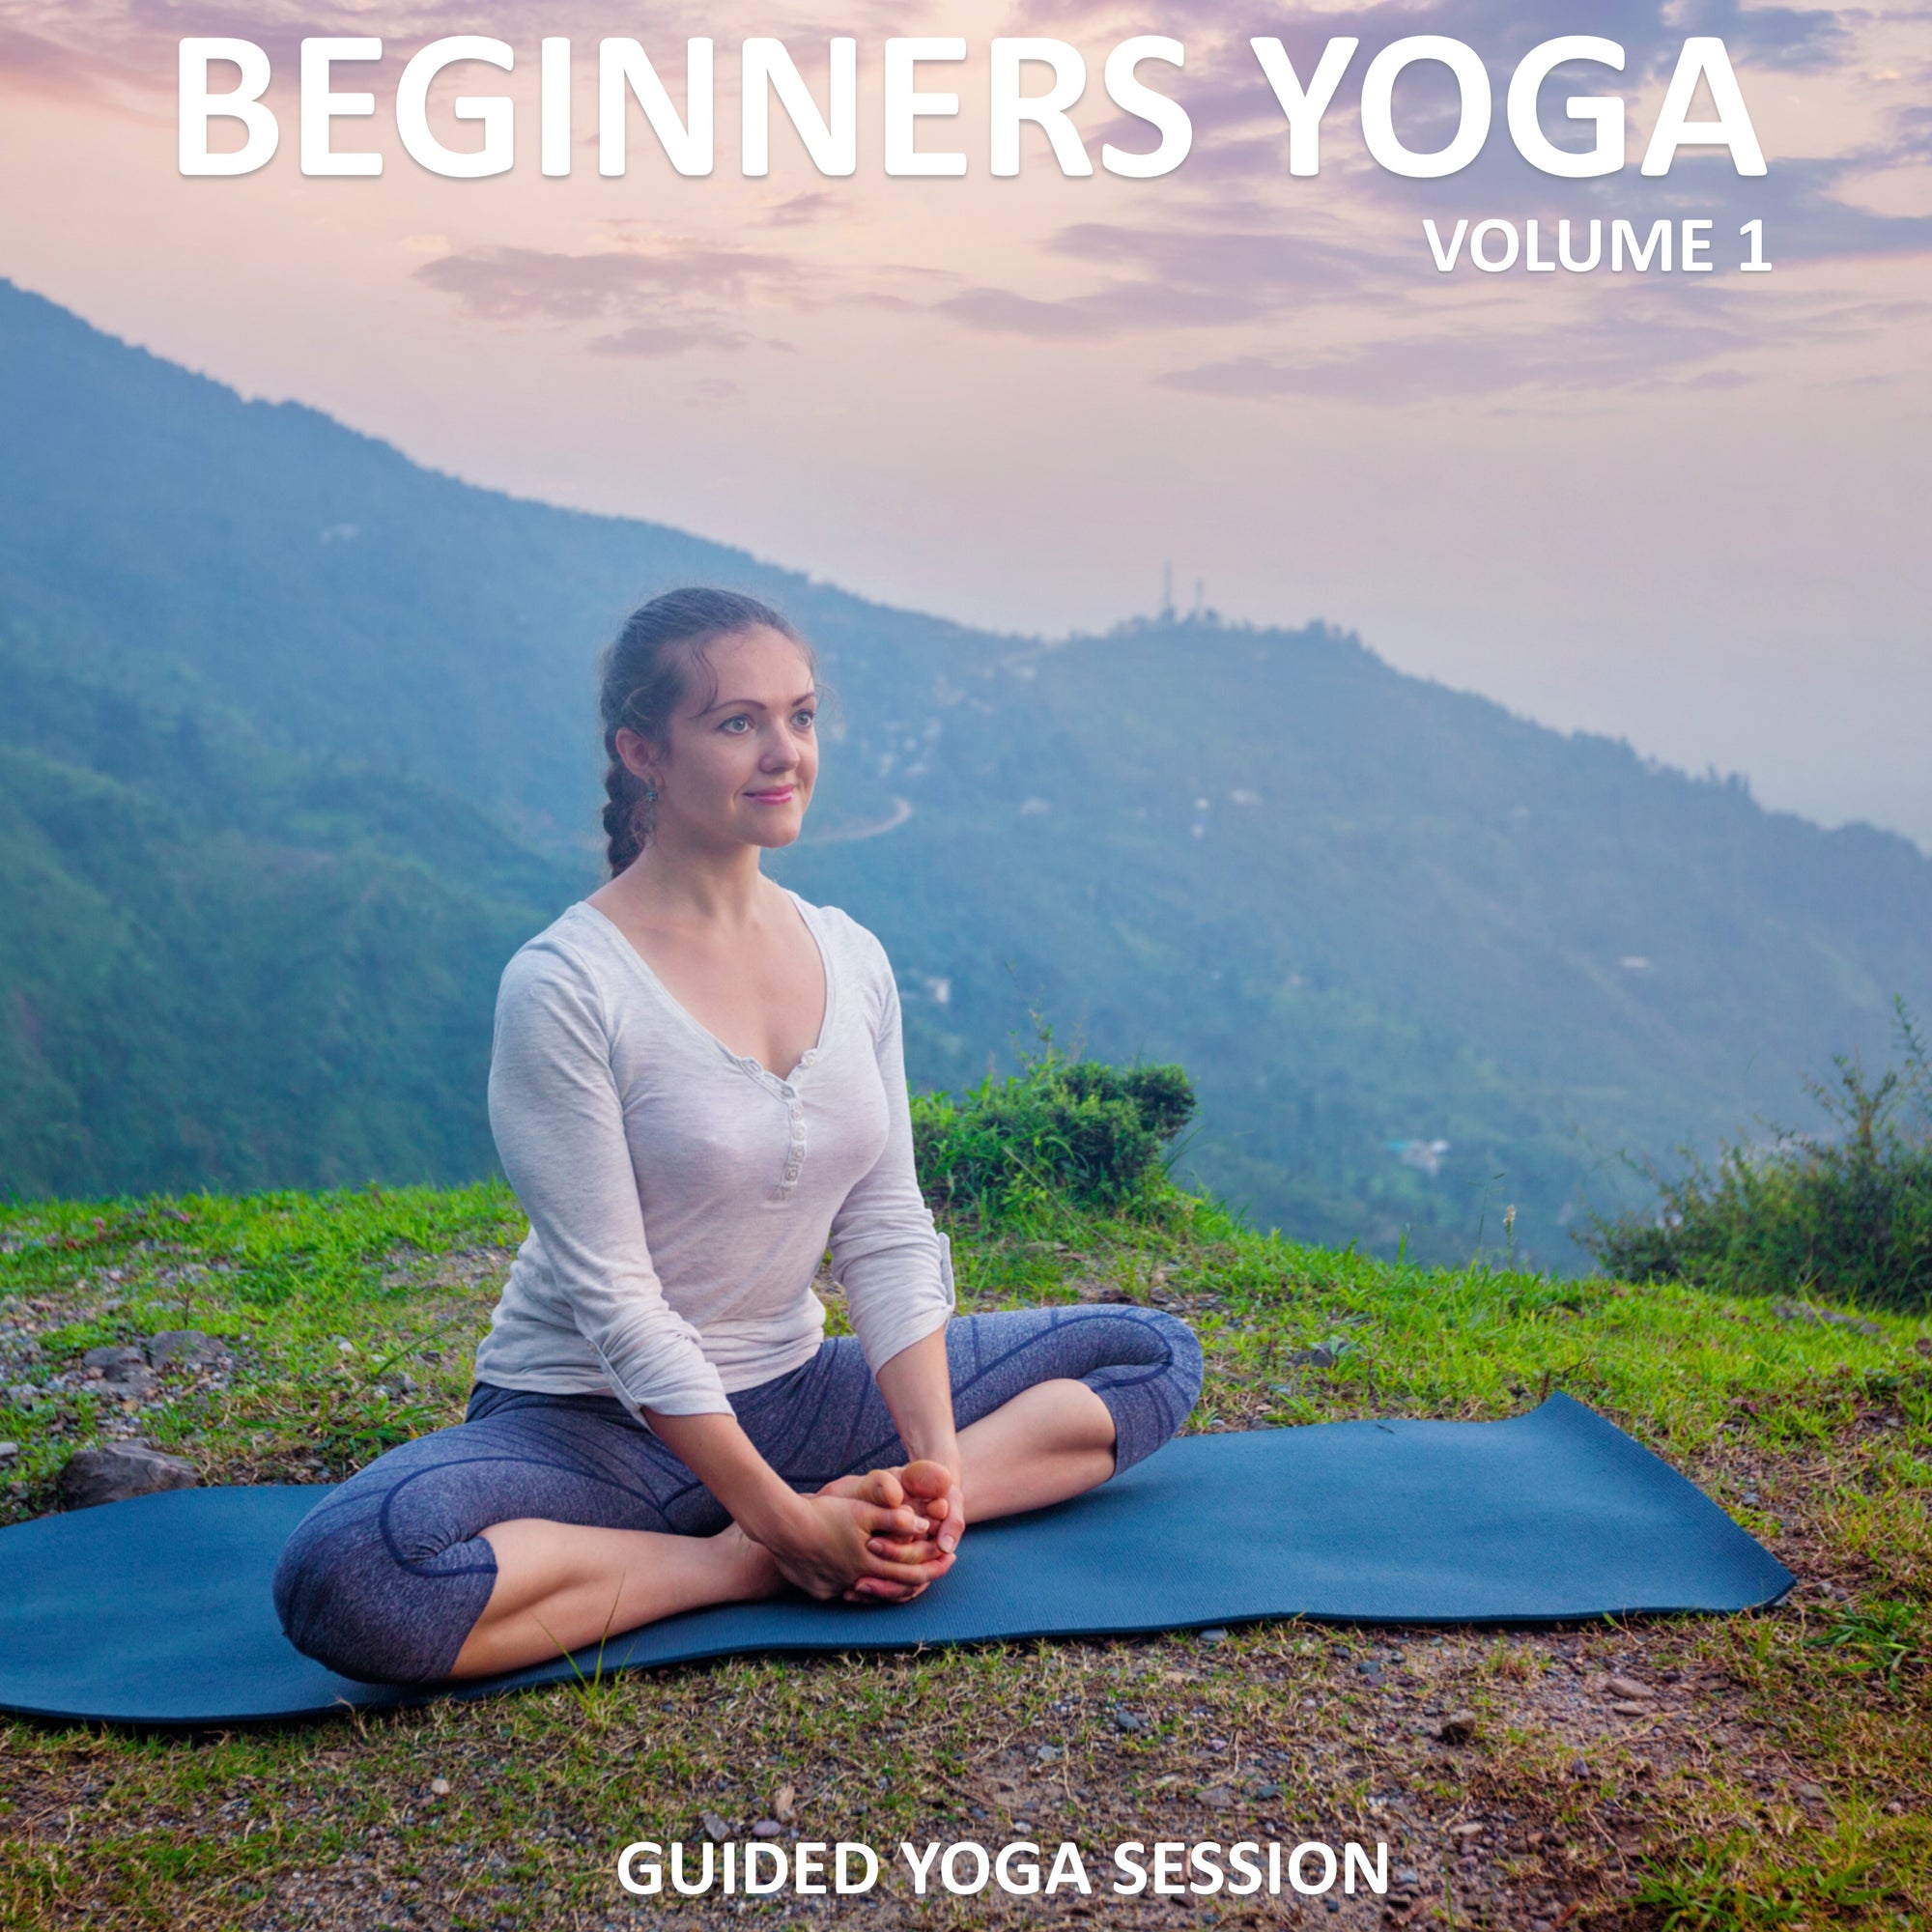 Beginners Yoga Volume 1